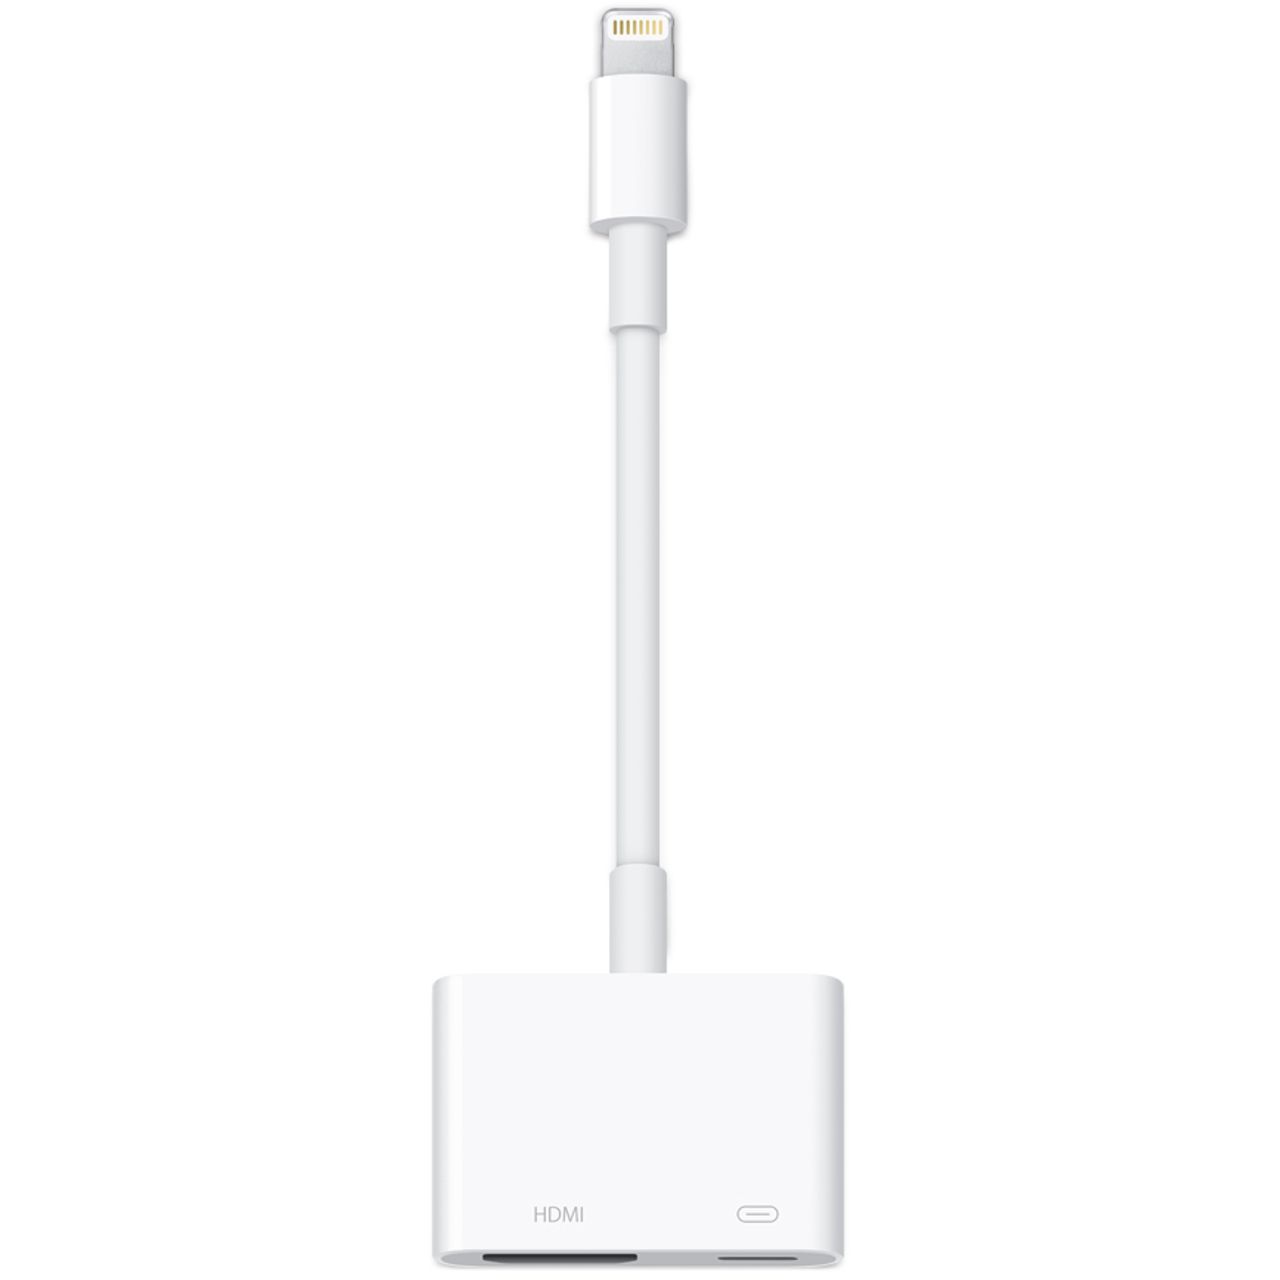 Apple Lightning to Digital AV Adapter Review